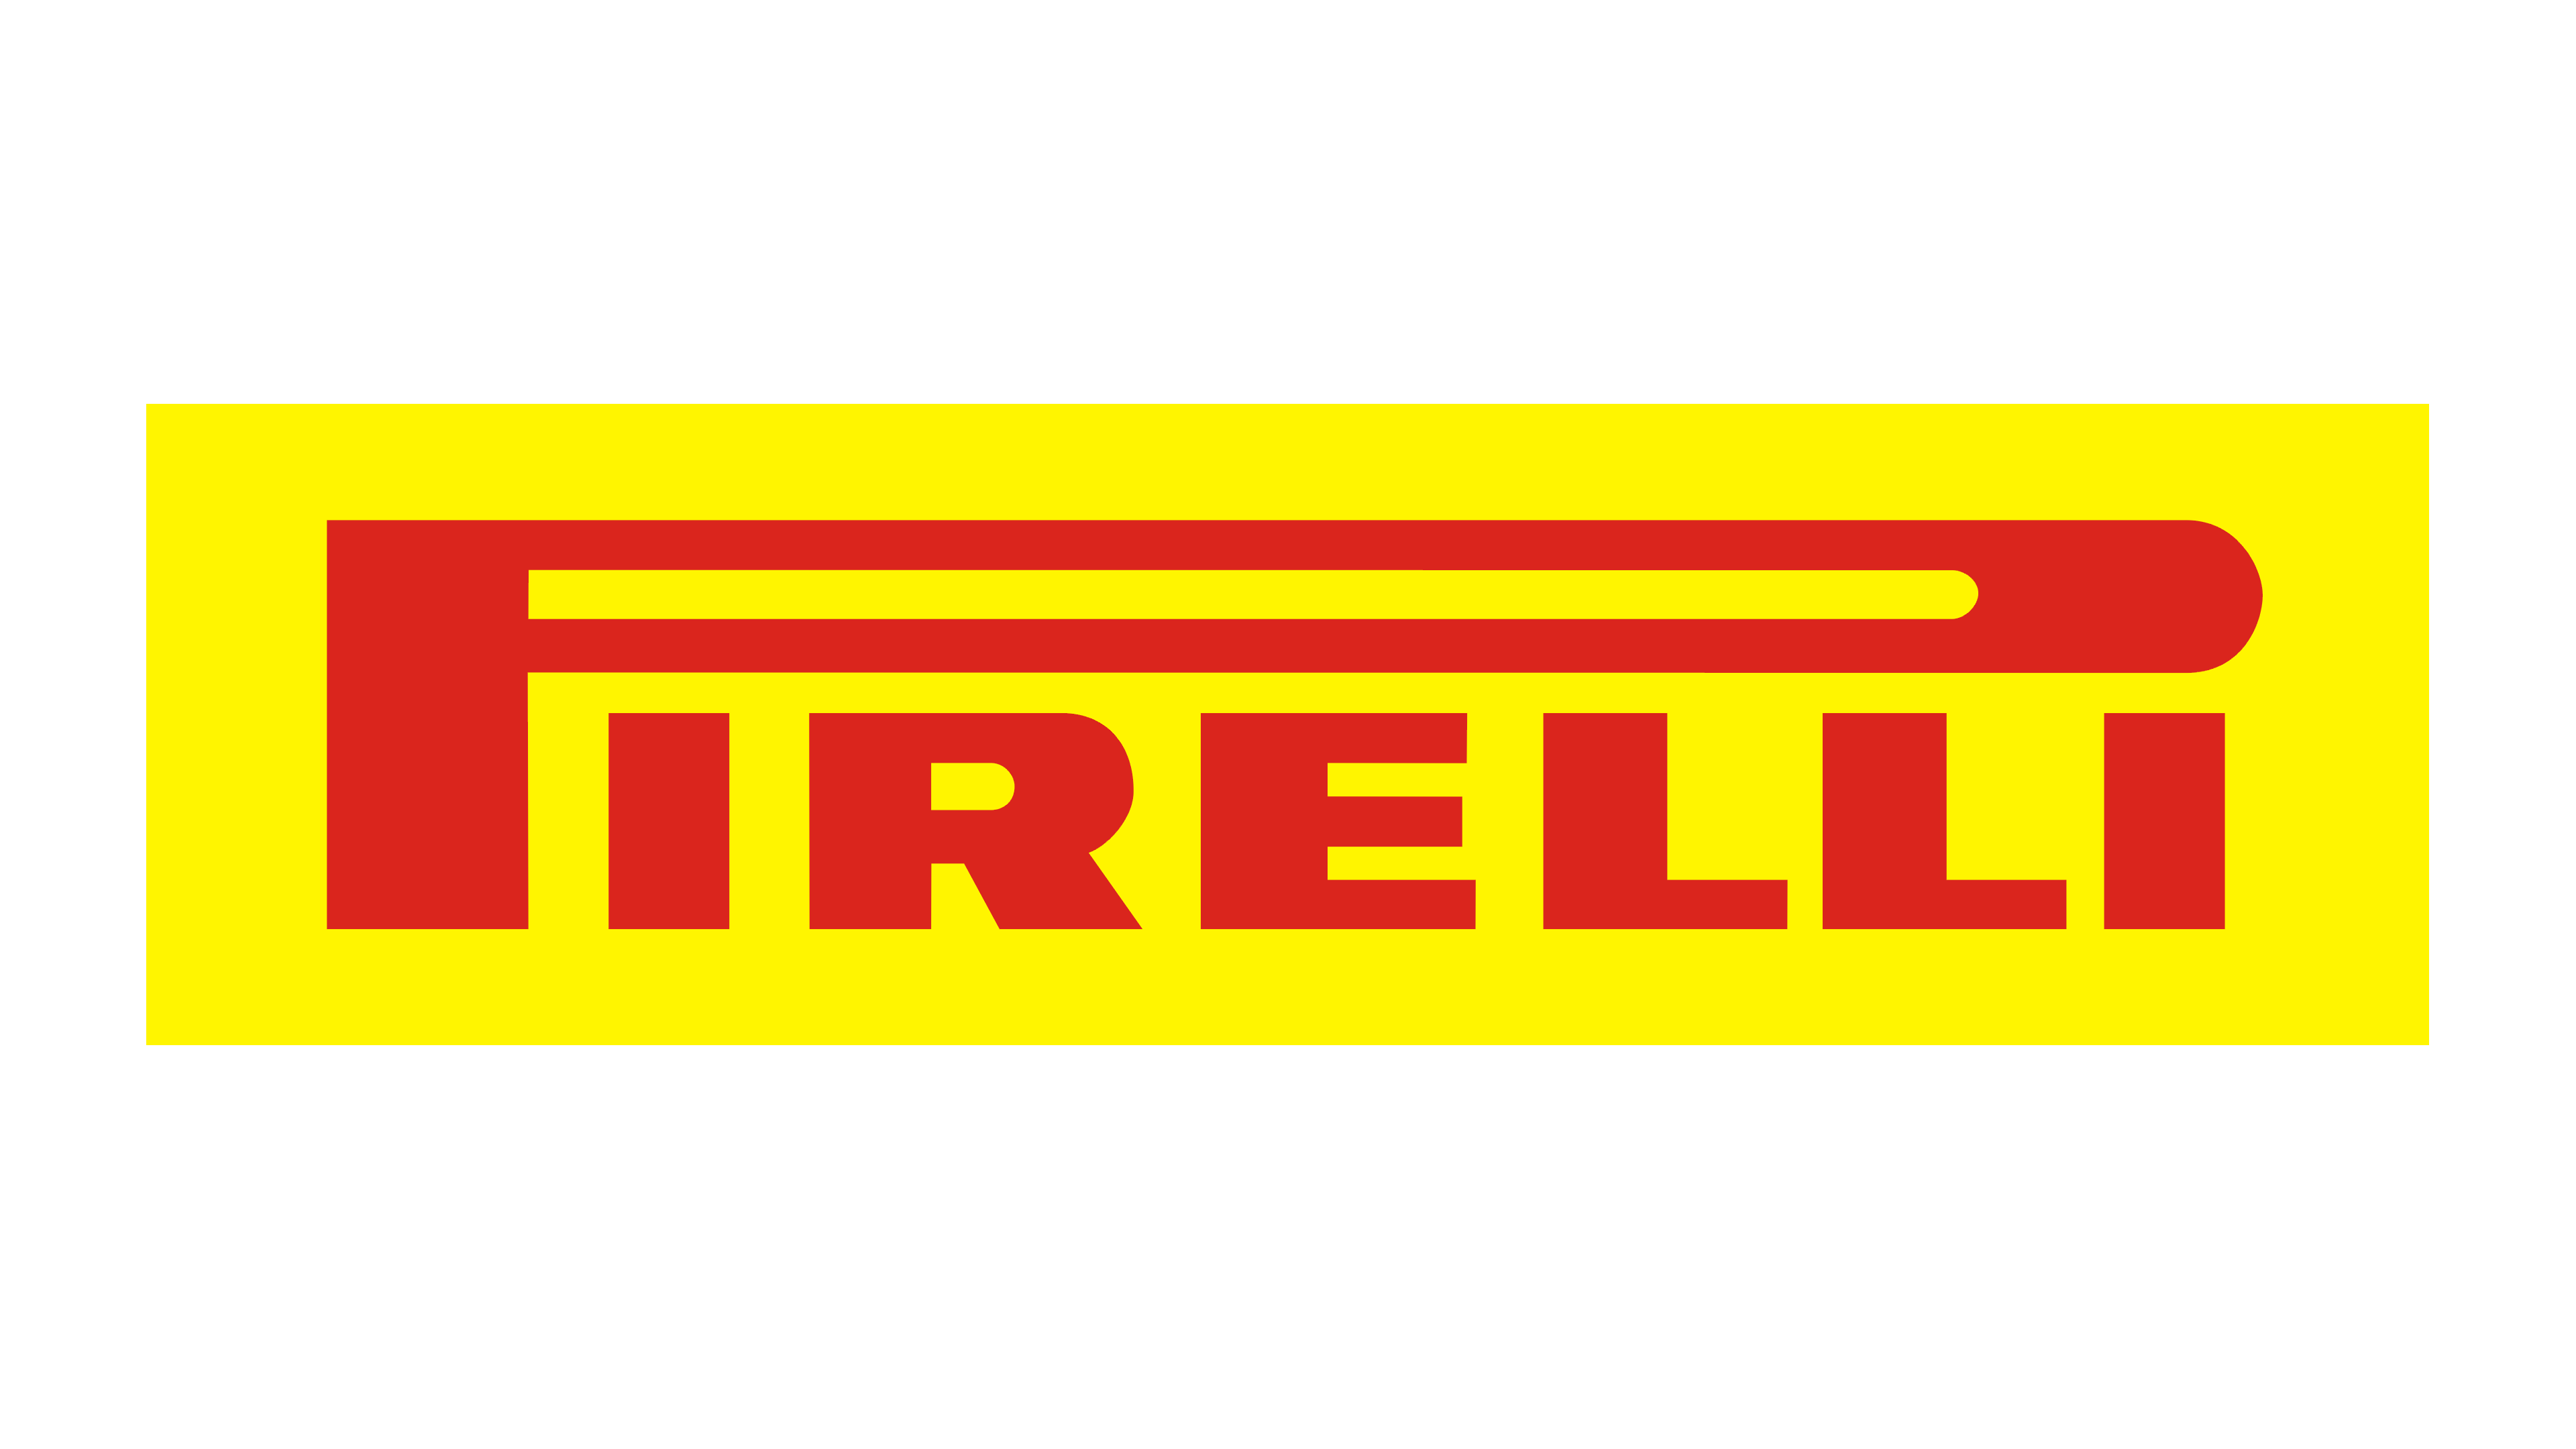 Brand logo for PIRELLI tires